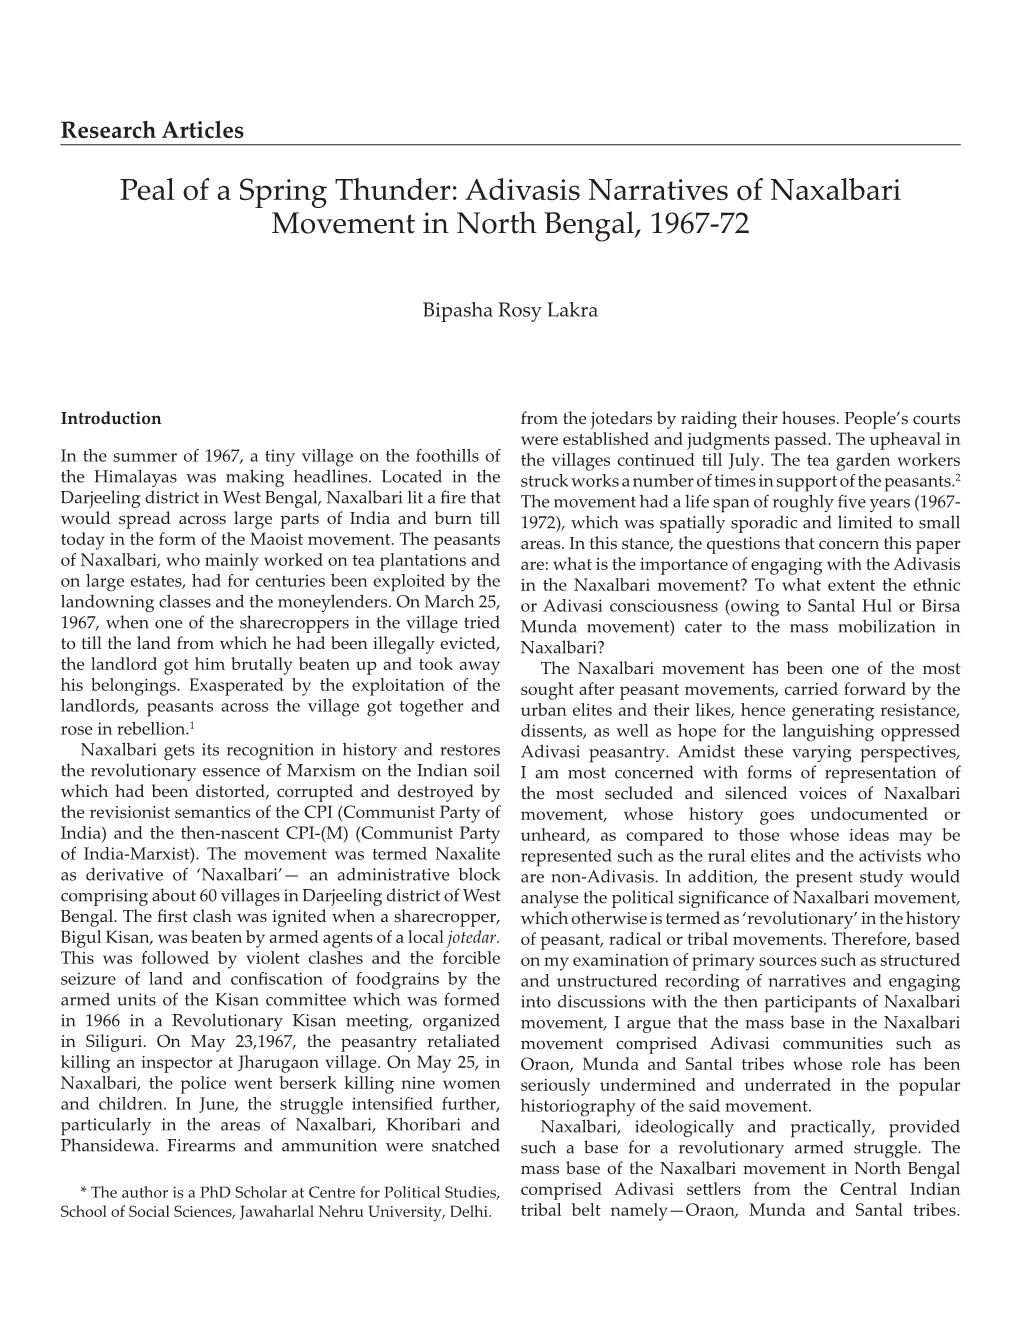 Peal of a Spring Thunder: Adivasis Narratives of Naxalbari Movement in North Bengal, 1967-72